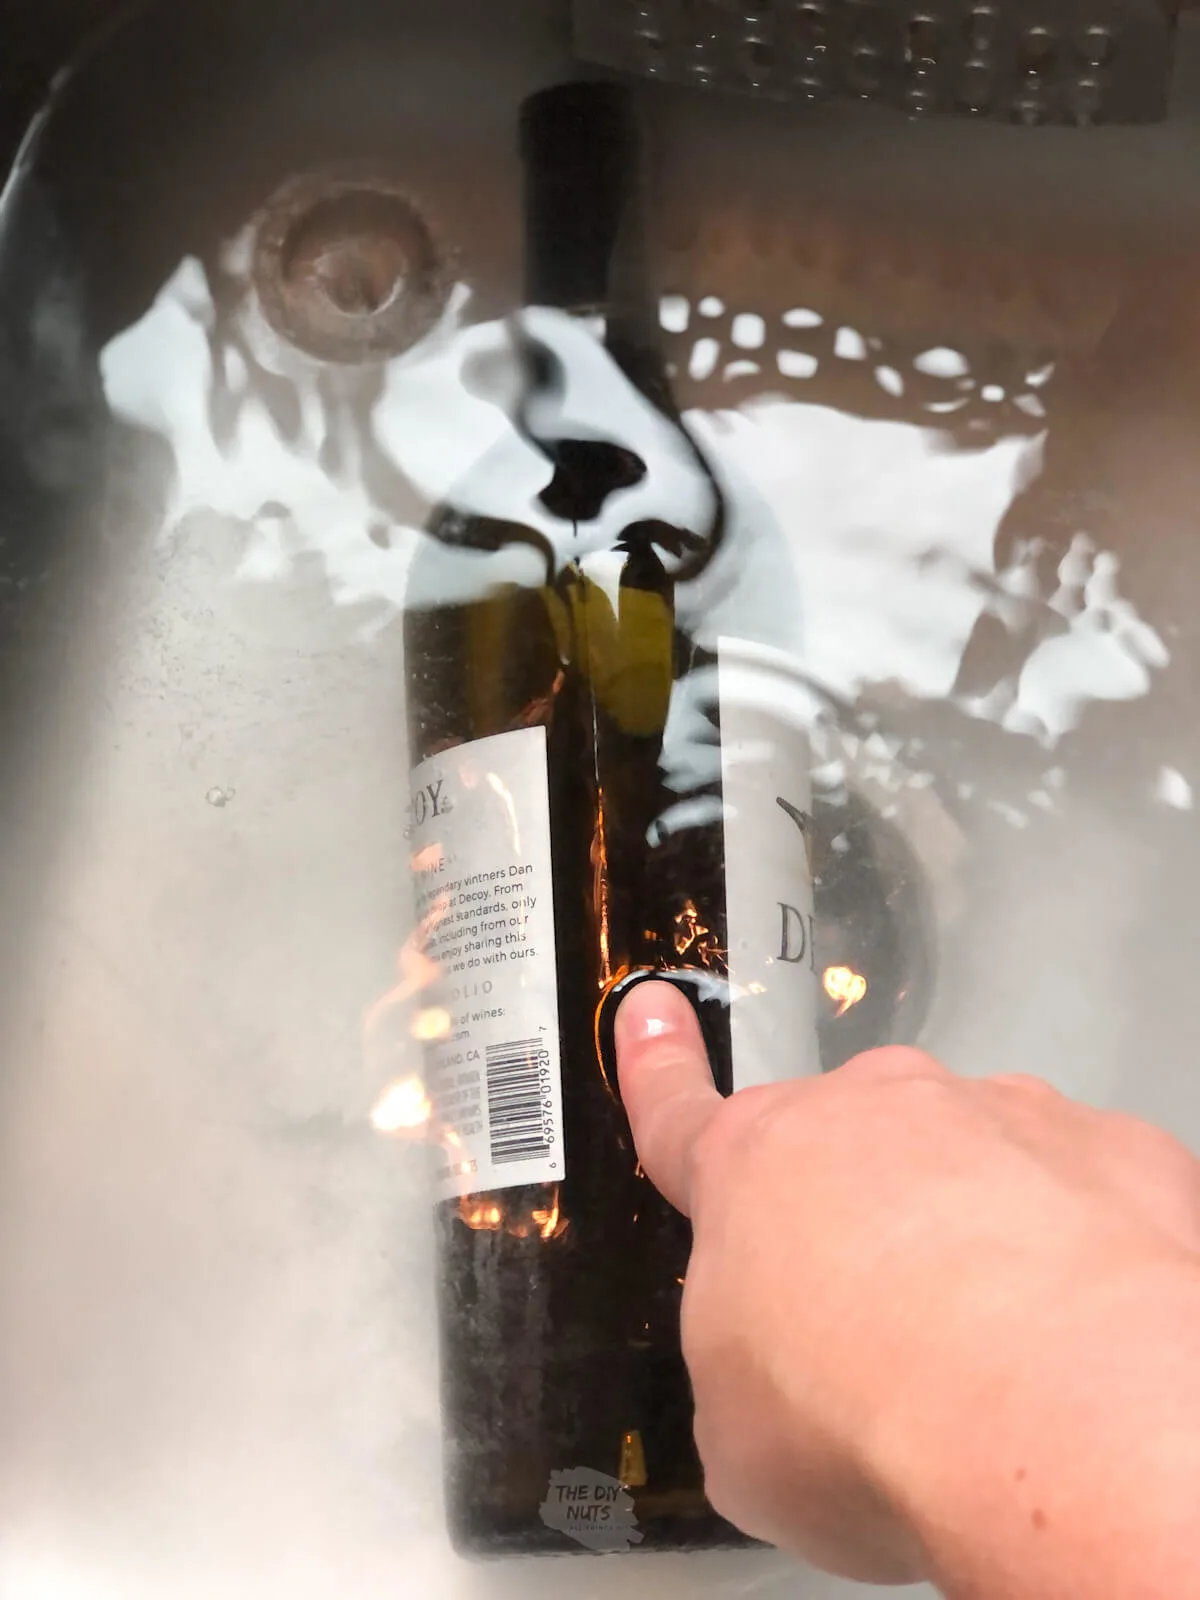 finger pushing wine bottle in baking soda mixture to help get label off